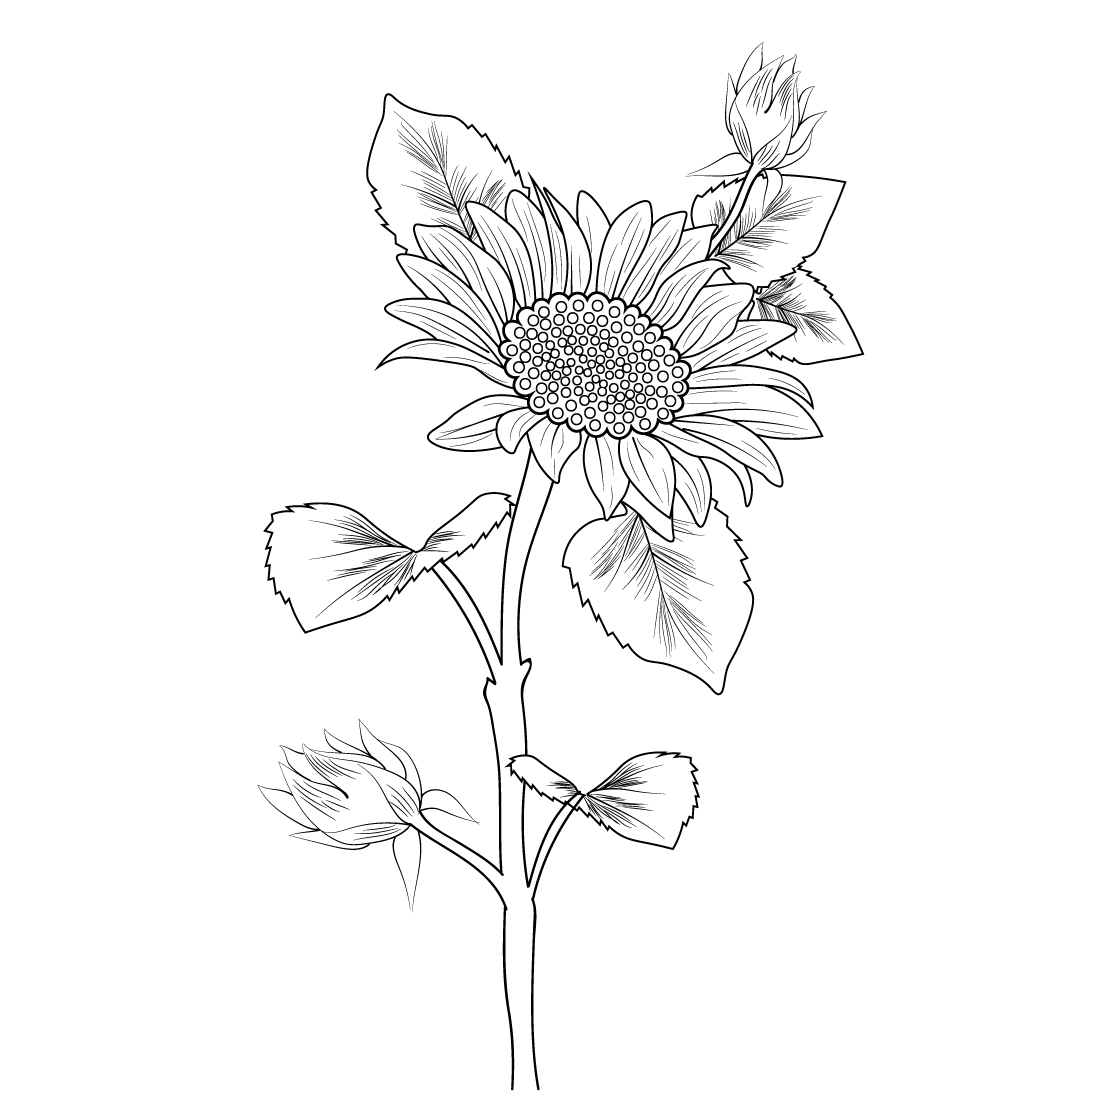 831 Sunflower tattoo Vector Images  Depositphotos